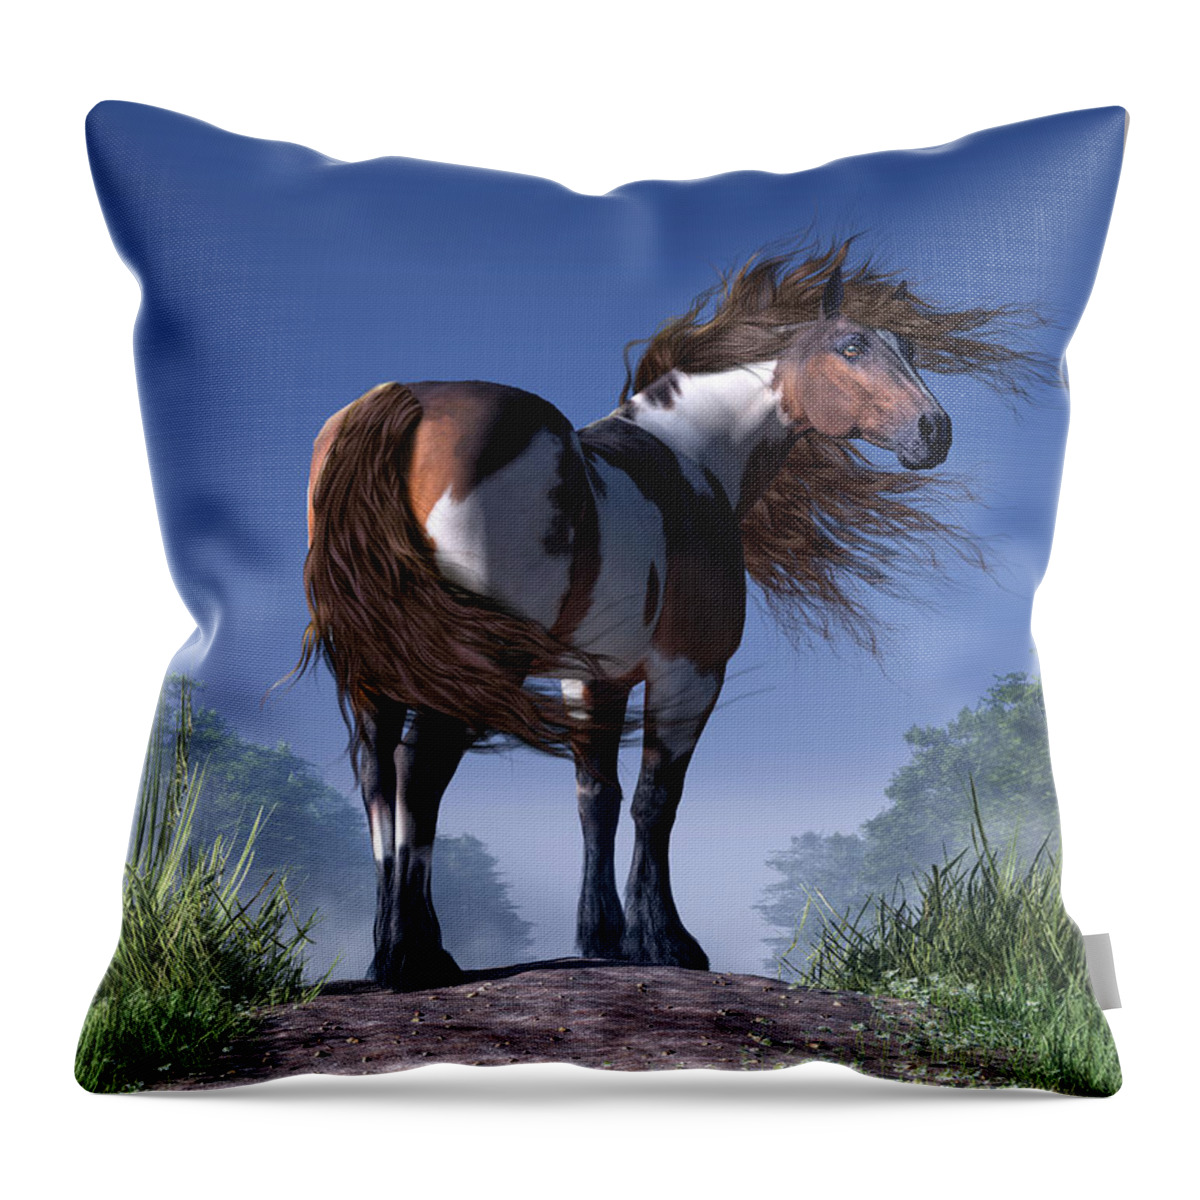 Mustang Trail Throw Pillow featuring the digital art Mustang Trail by Daniel Eskridge